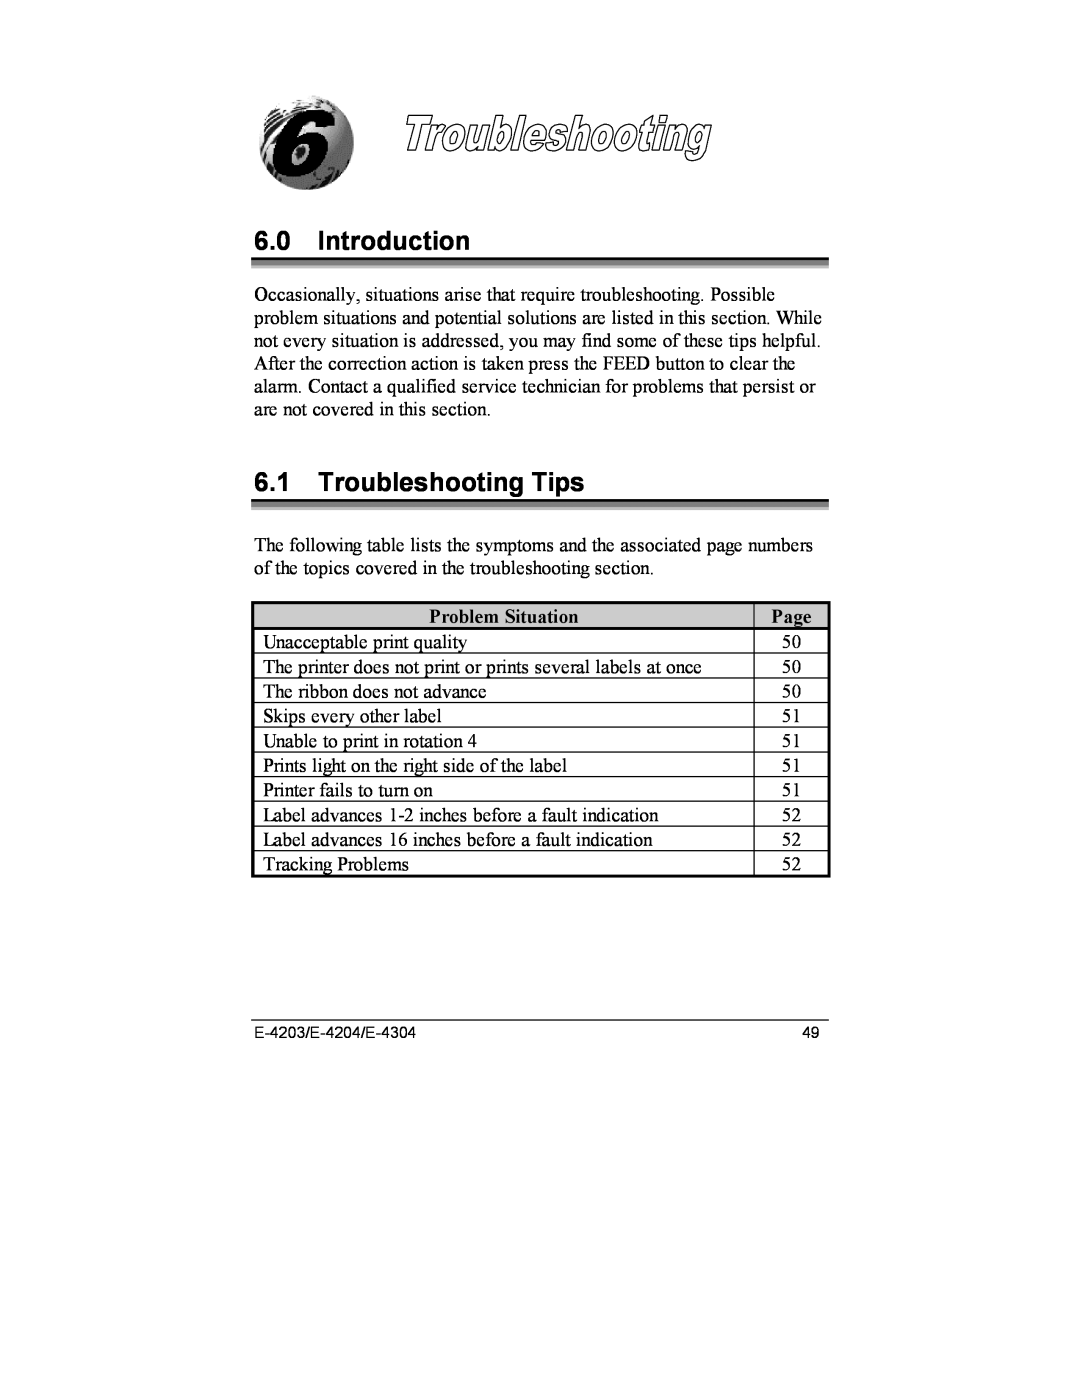 Datamax E-4304e, E-4203, E-4204 manual Introduction, Troubleshooting Tips, Problem Situation, Page 